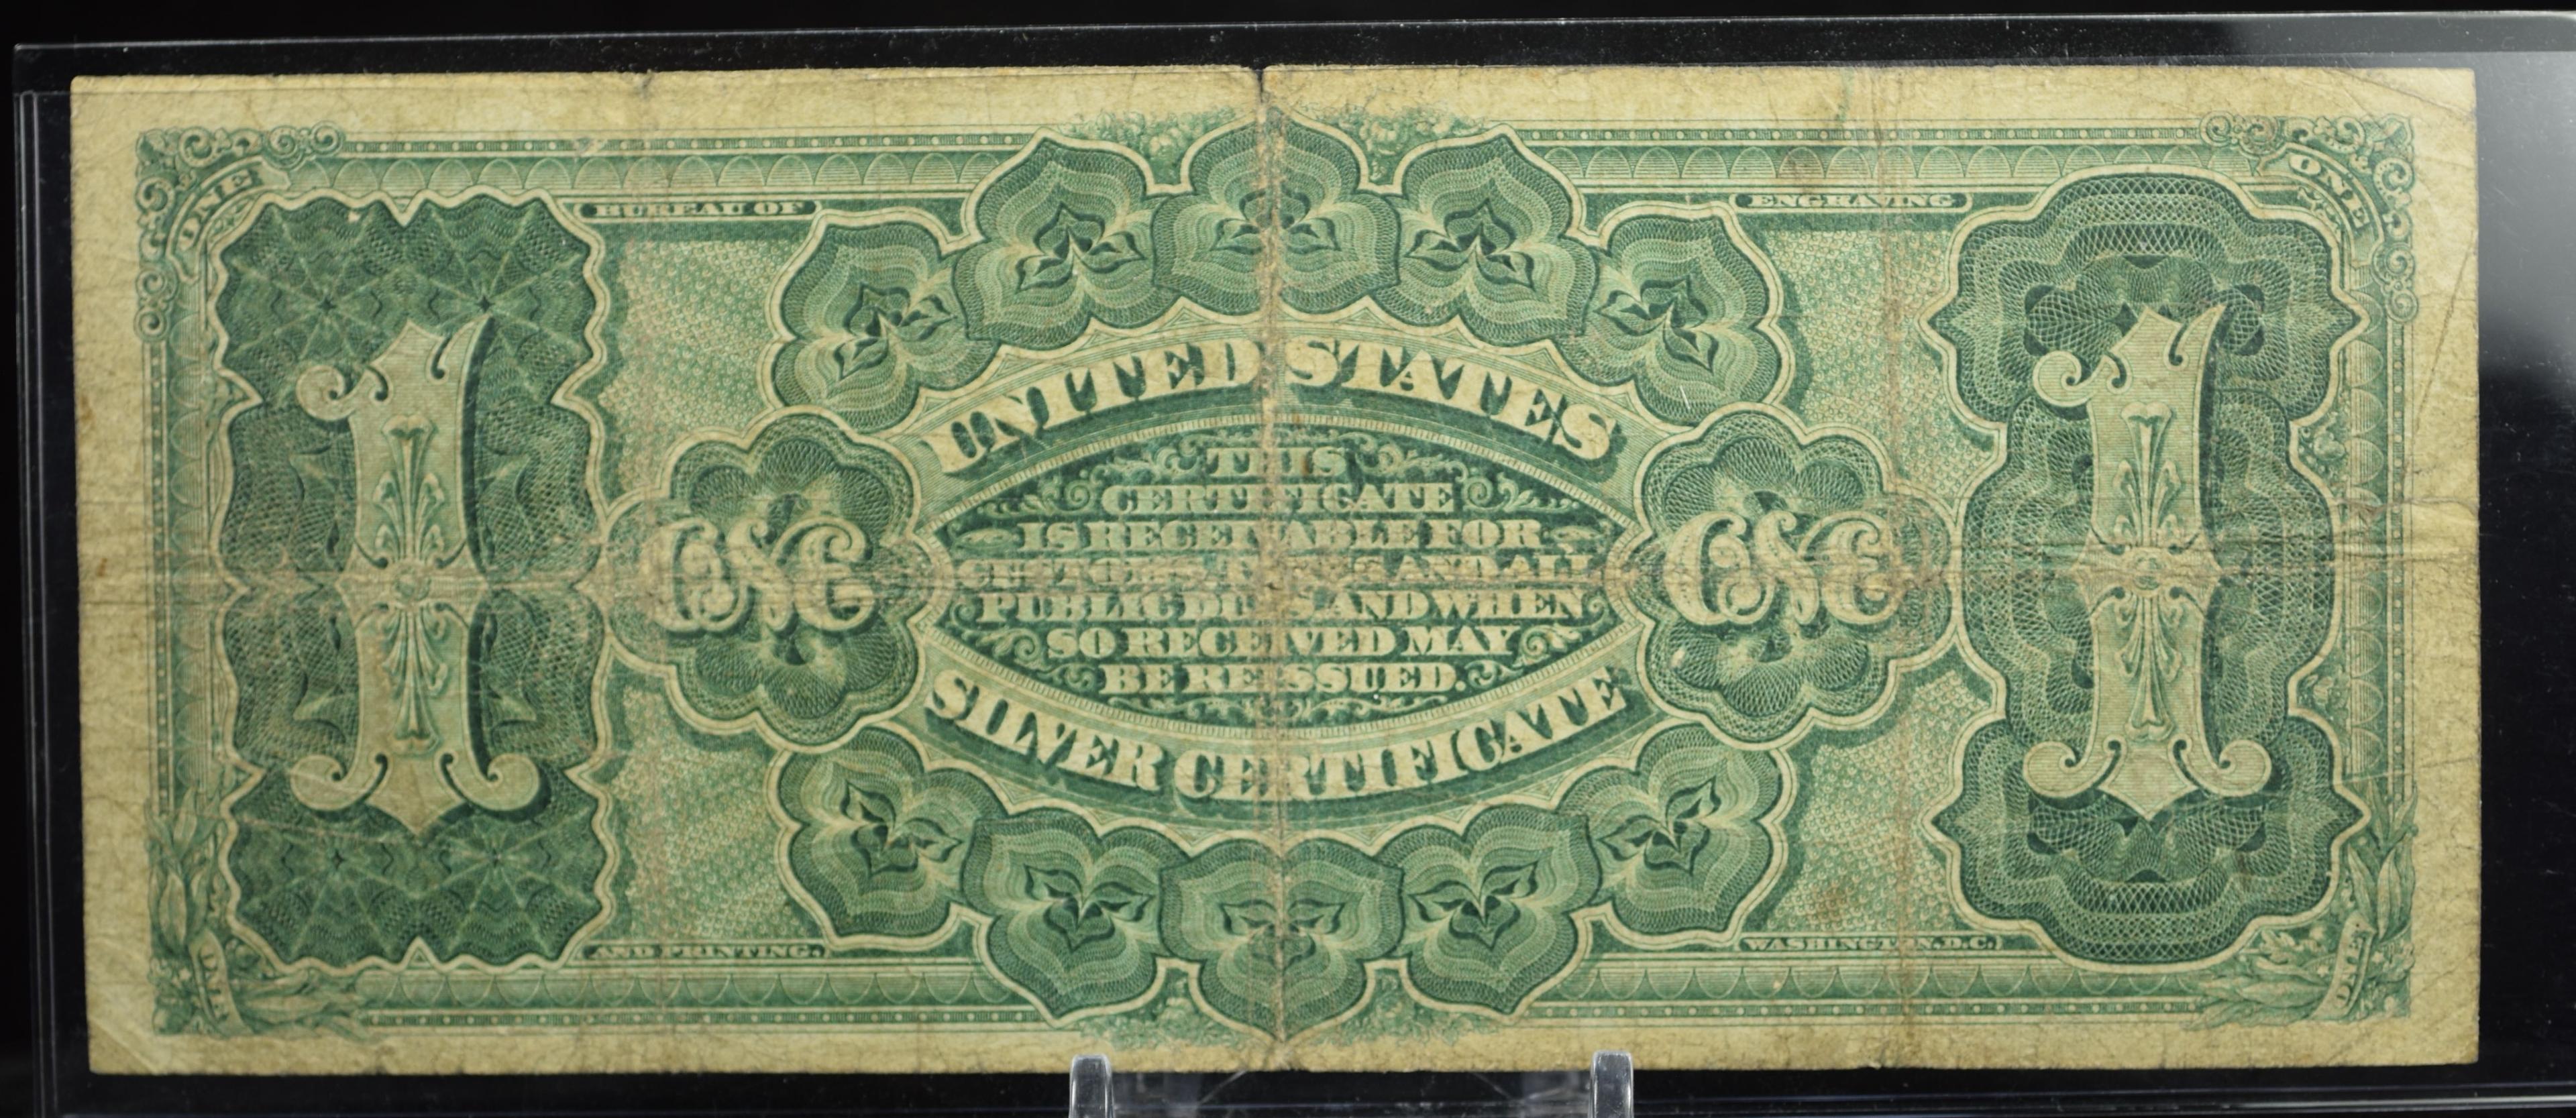 1886 $1 Martha US Silver Certificate B23015